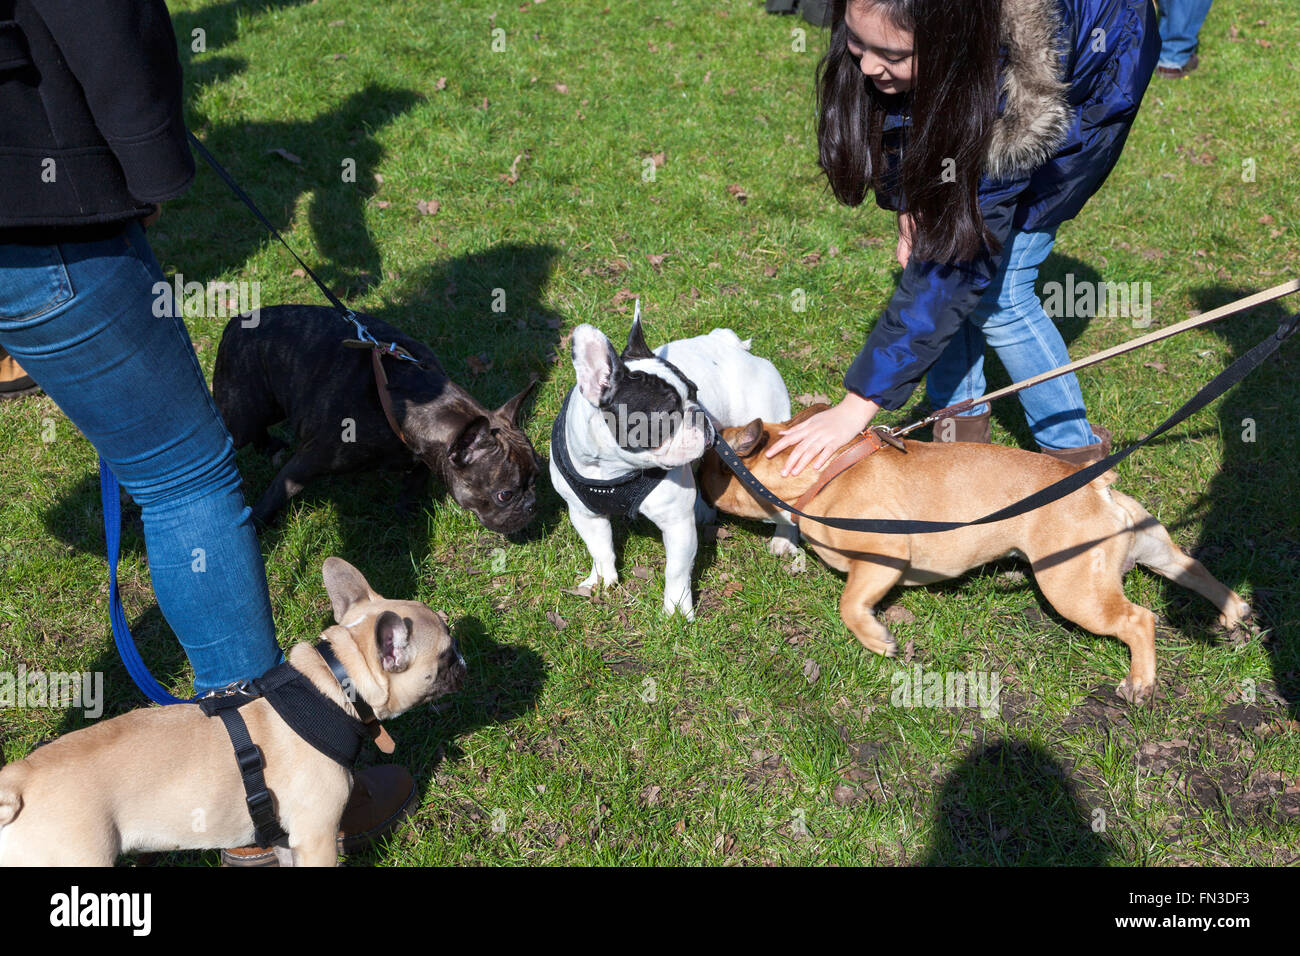 13 de marzo de 2016 - Meet-up y caminar de propietarios de Bulldog Francés de Londres en Regent's Park, Londres, Reino Unido. Foto de stock